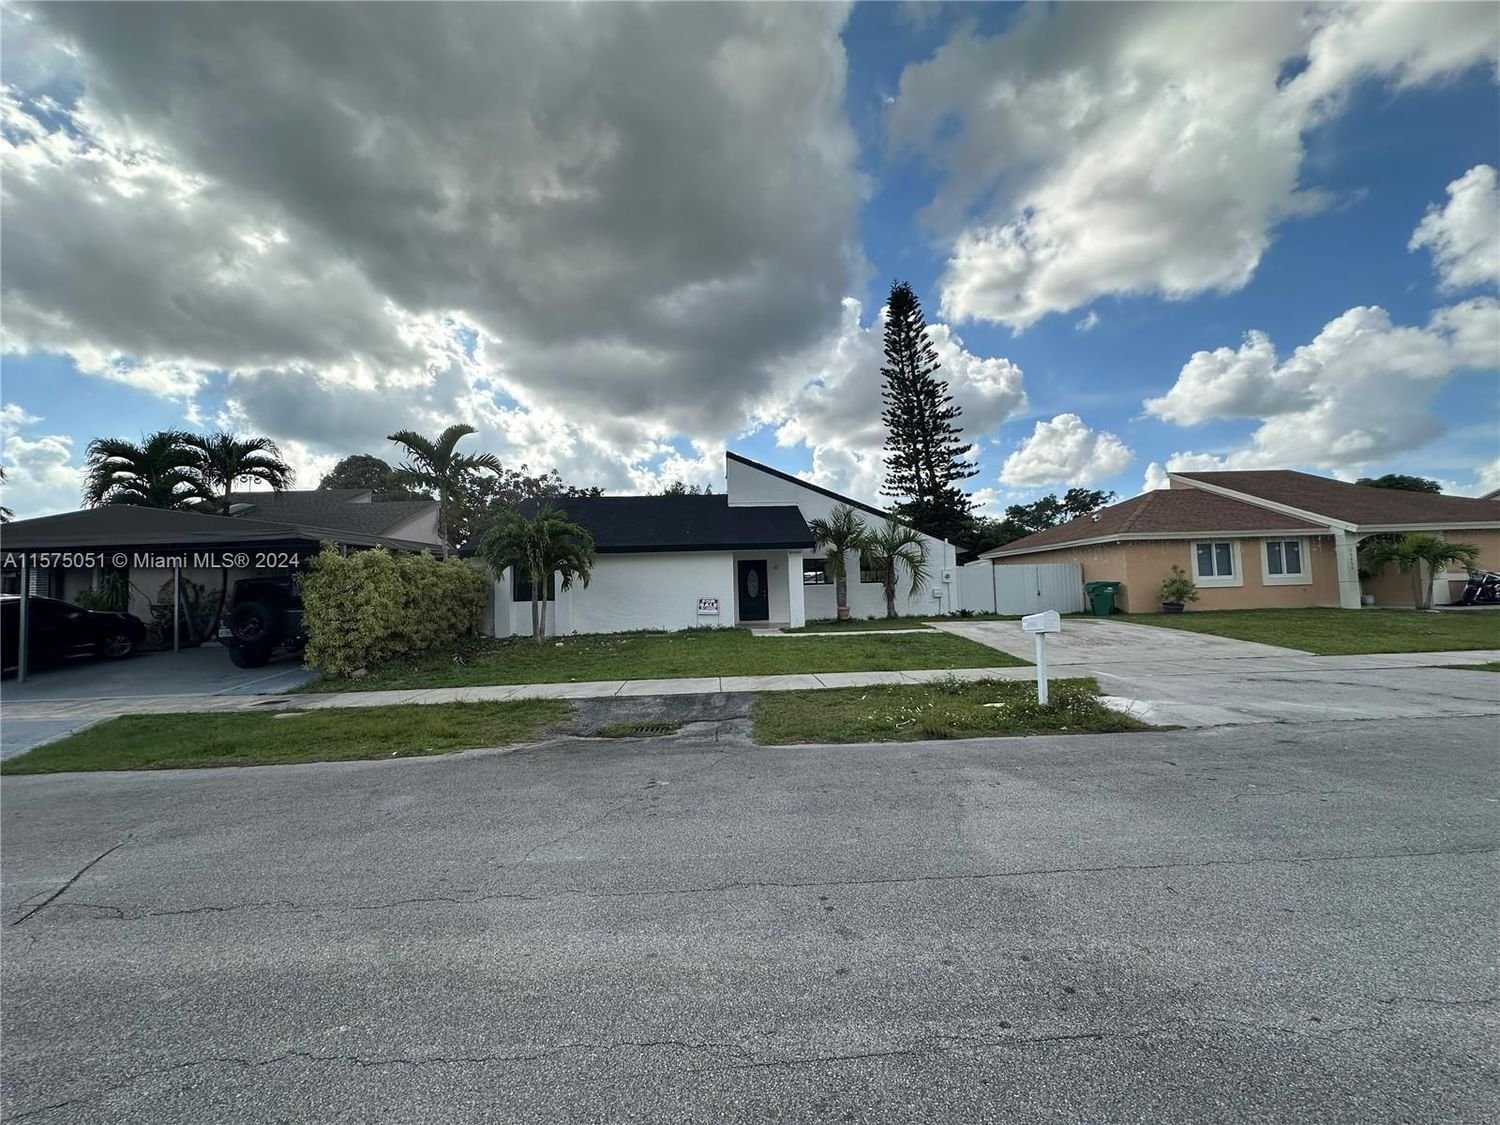 Real estate property located at 20460 122nd Pl, Miami-Dade County, OAK PARK SEC 4, Miami, FL